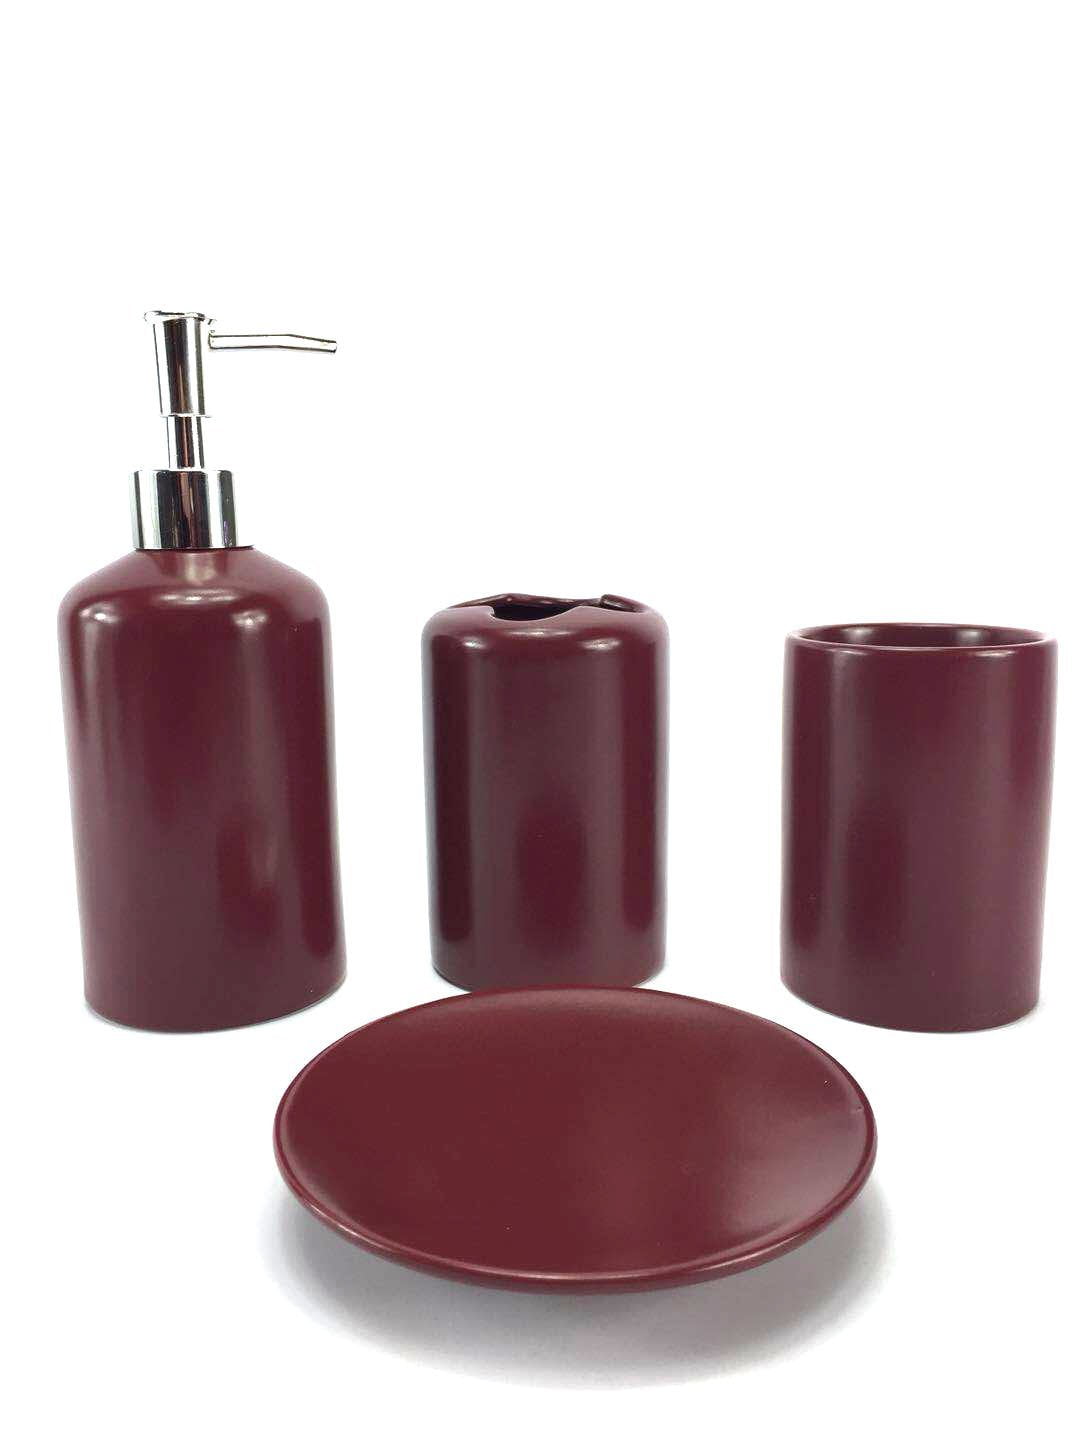 Designer 4-Piece Ceramic Bath Accessory Set  Free Shipping From USA